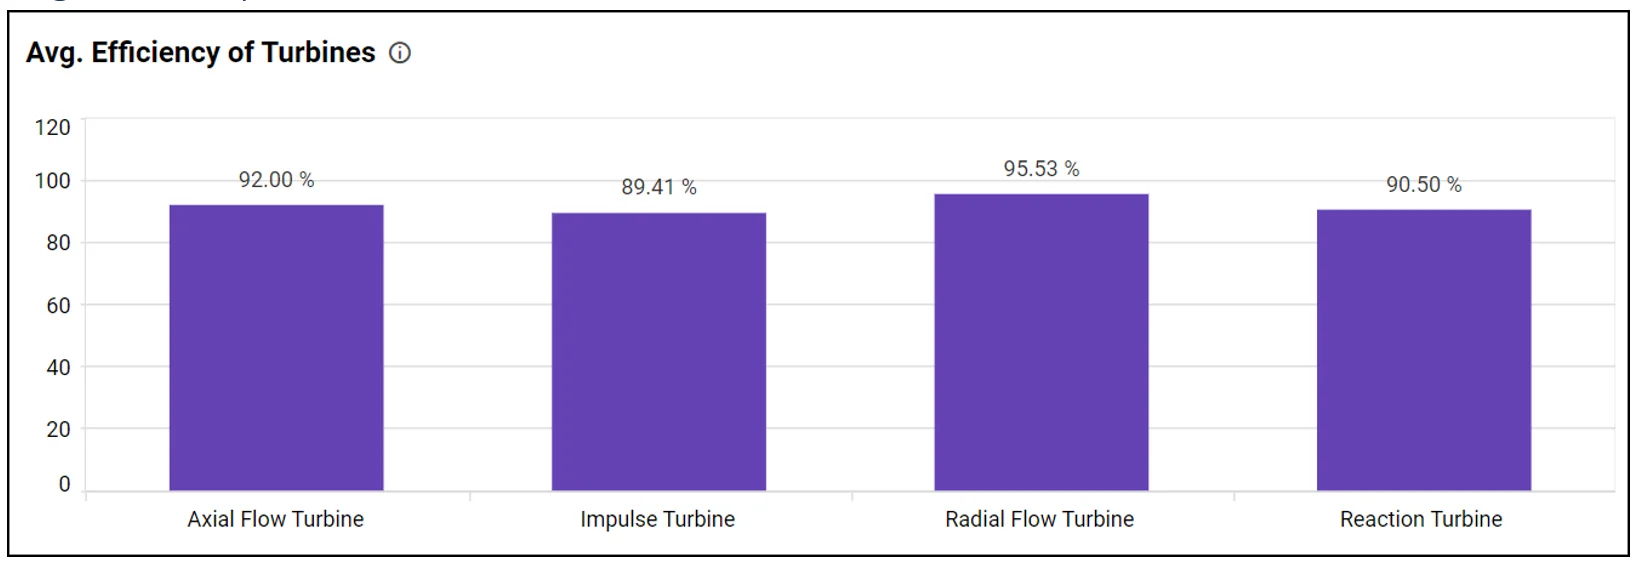 Avg. Efficiency of Turbines